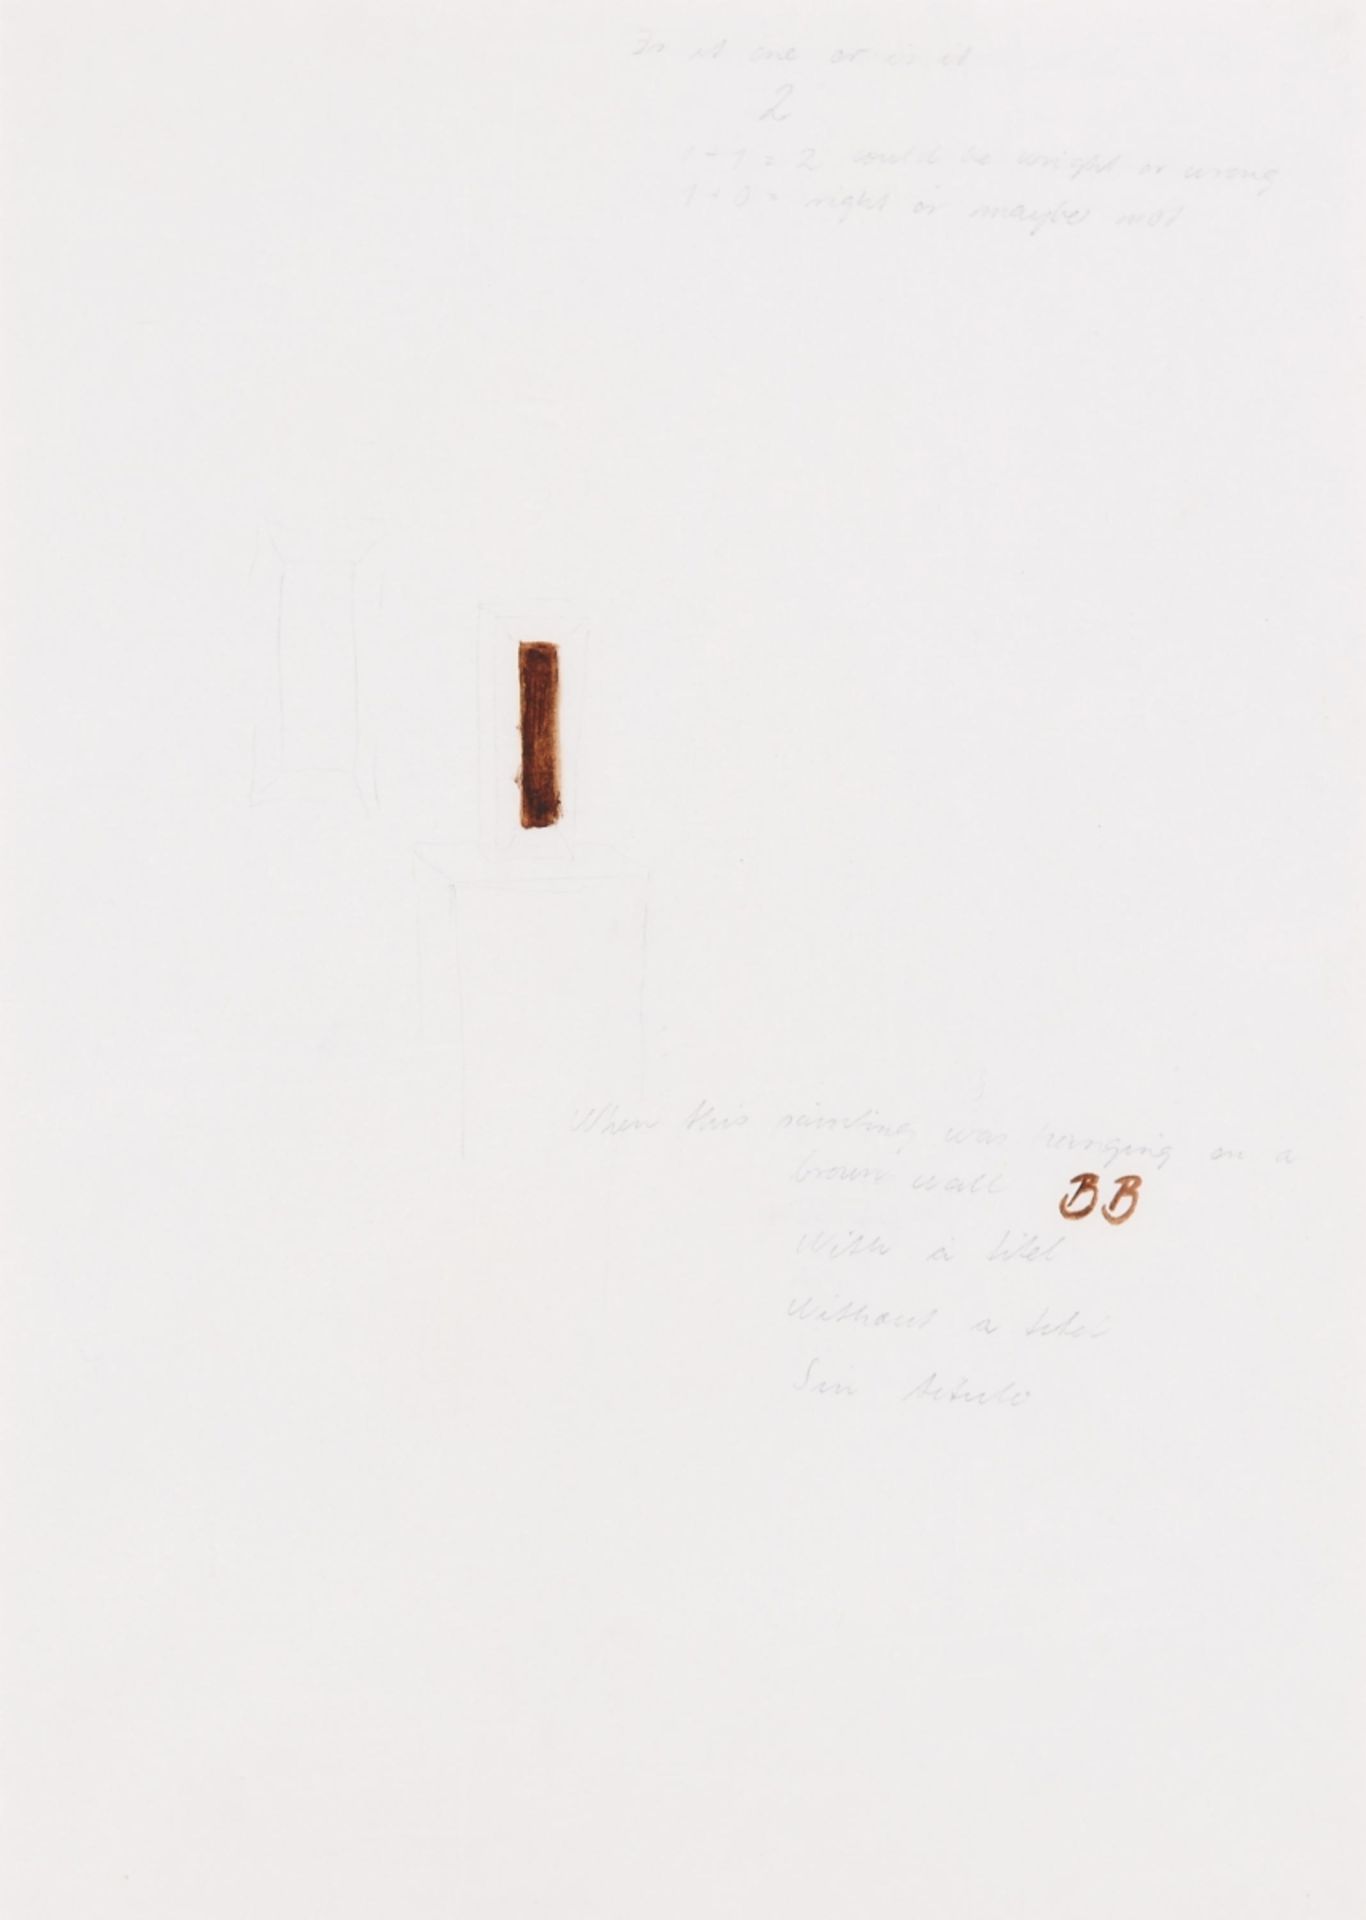 Sonderregelungen-Special-Conditions_Achenbach-Art-Auction

GUDJÓNSDÓTTIR, ANNA1962 IslandKonvolut